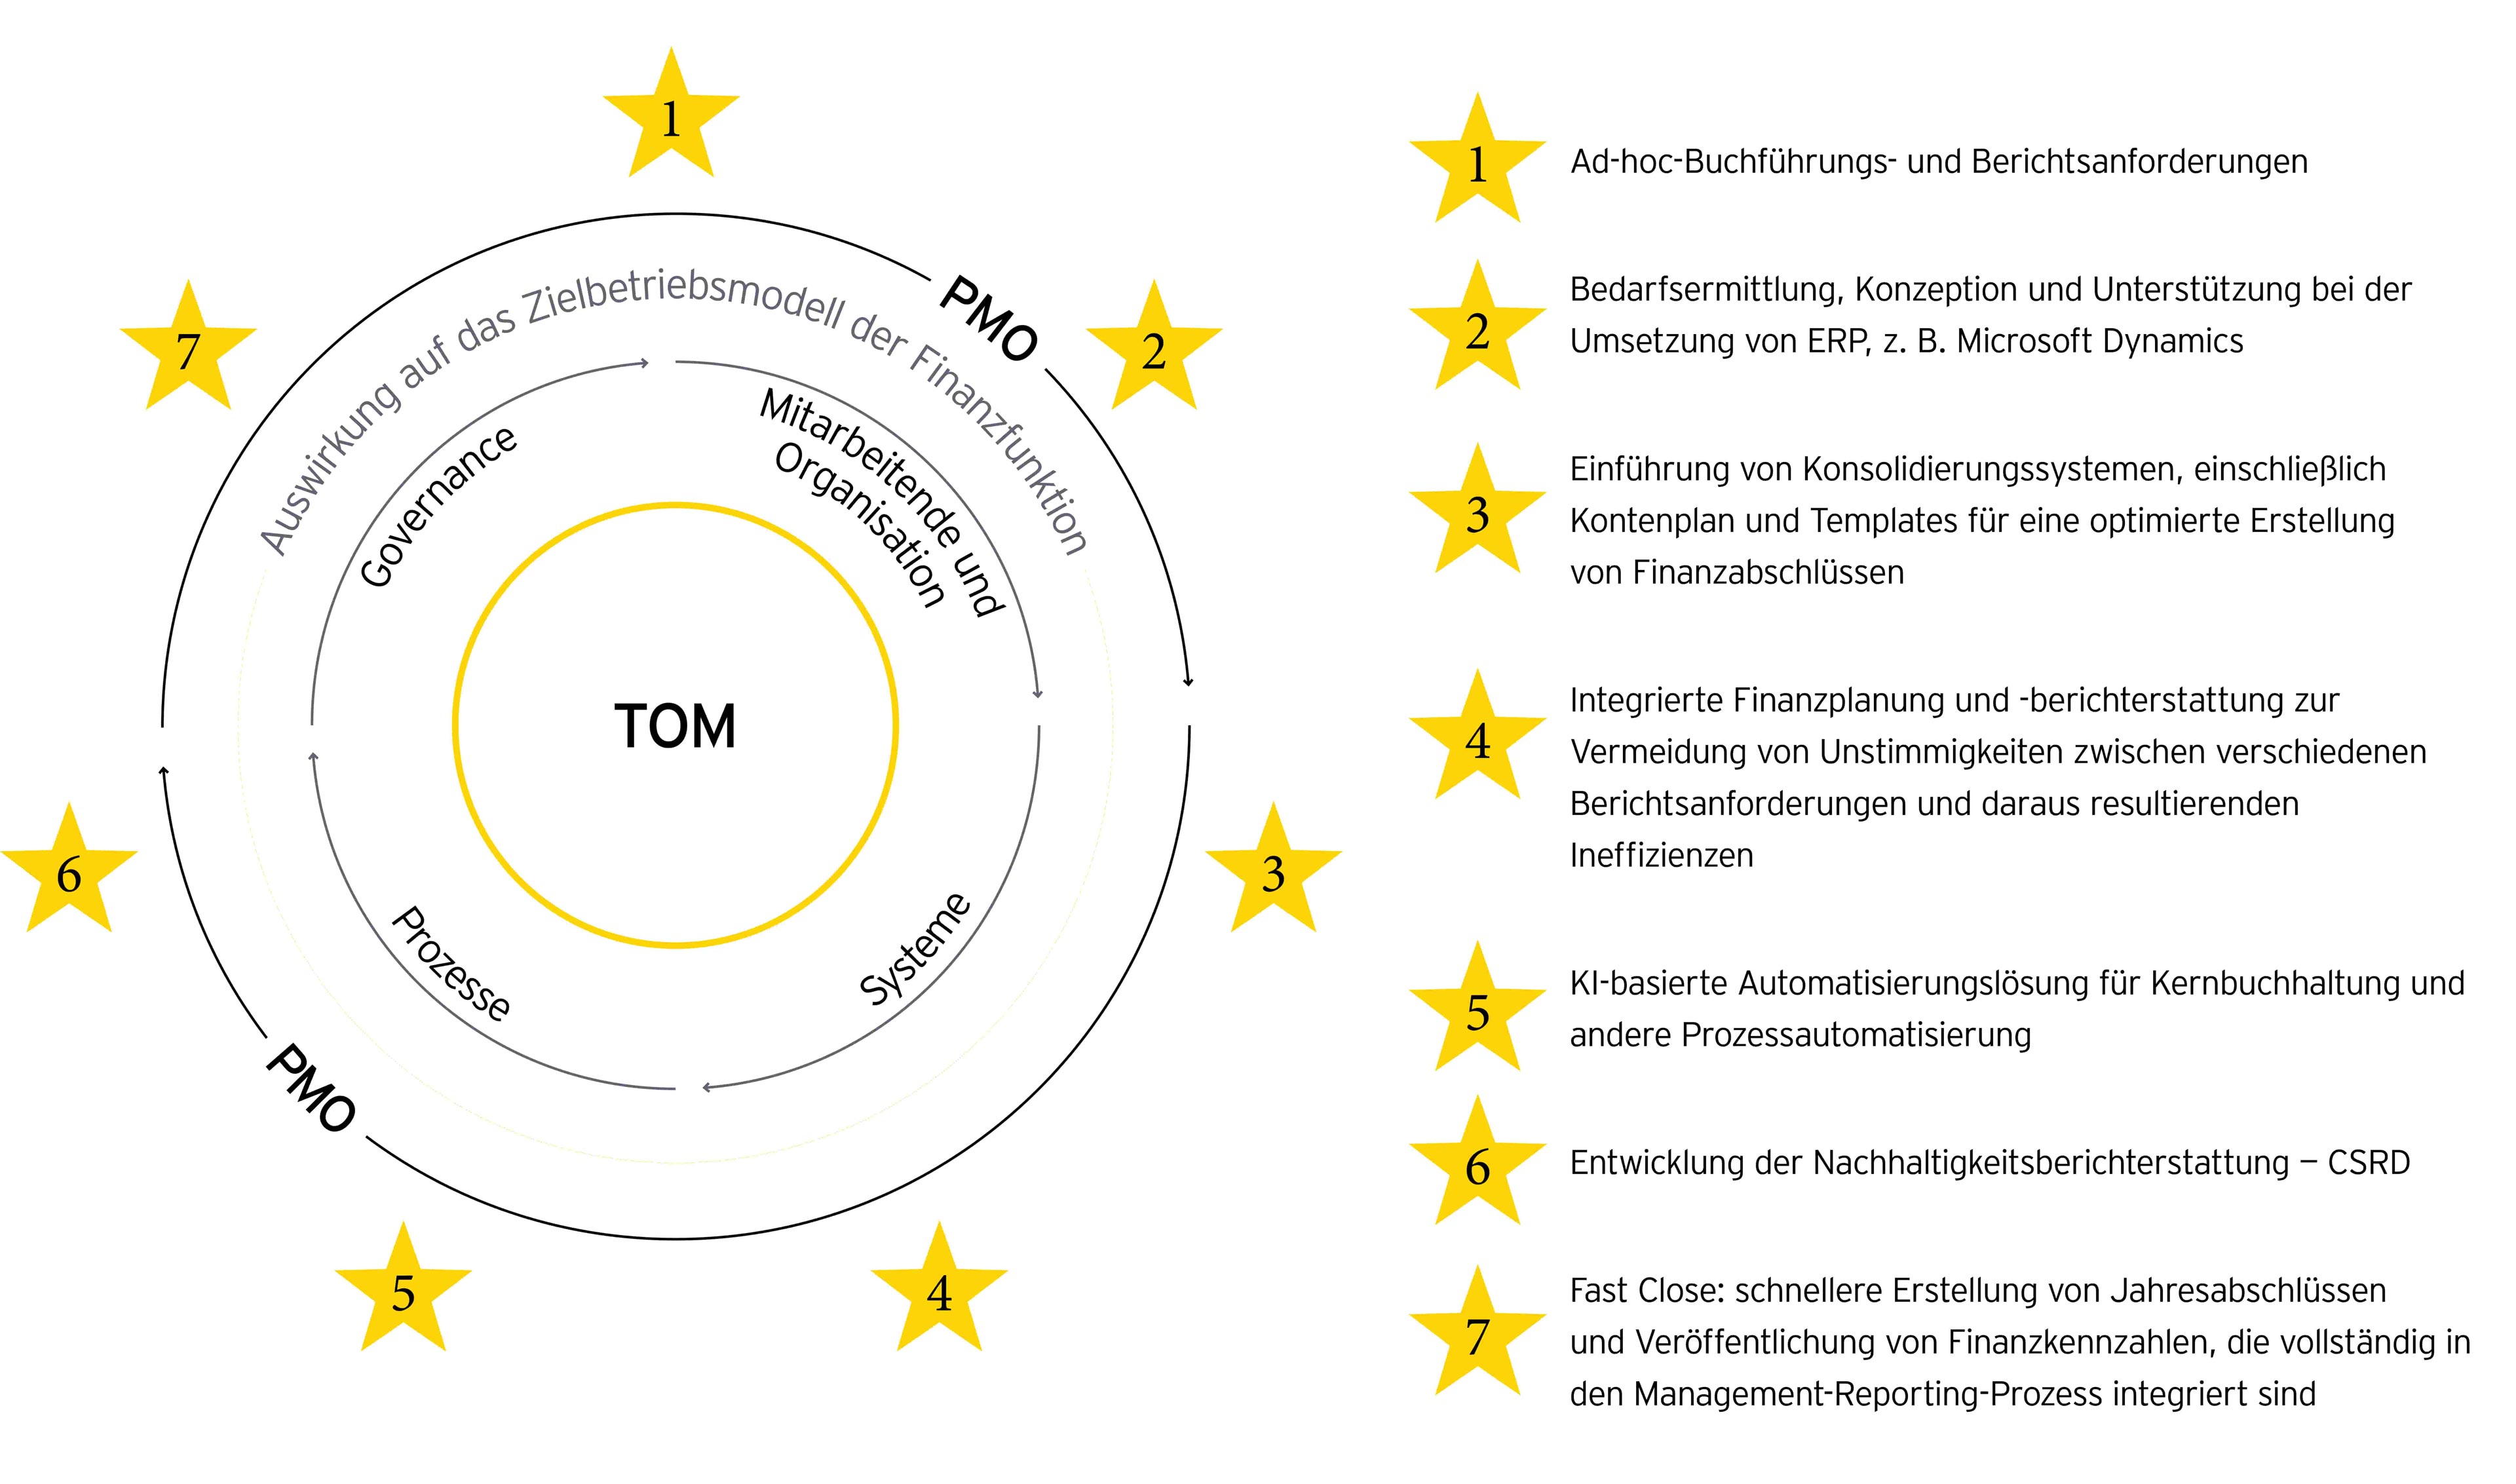 Übersicht des Target-Operating-Models (TOM) der Finanzfunktion